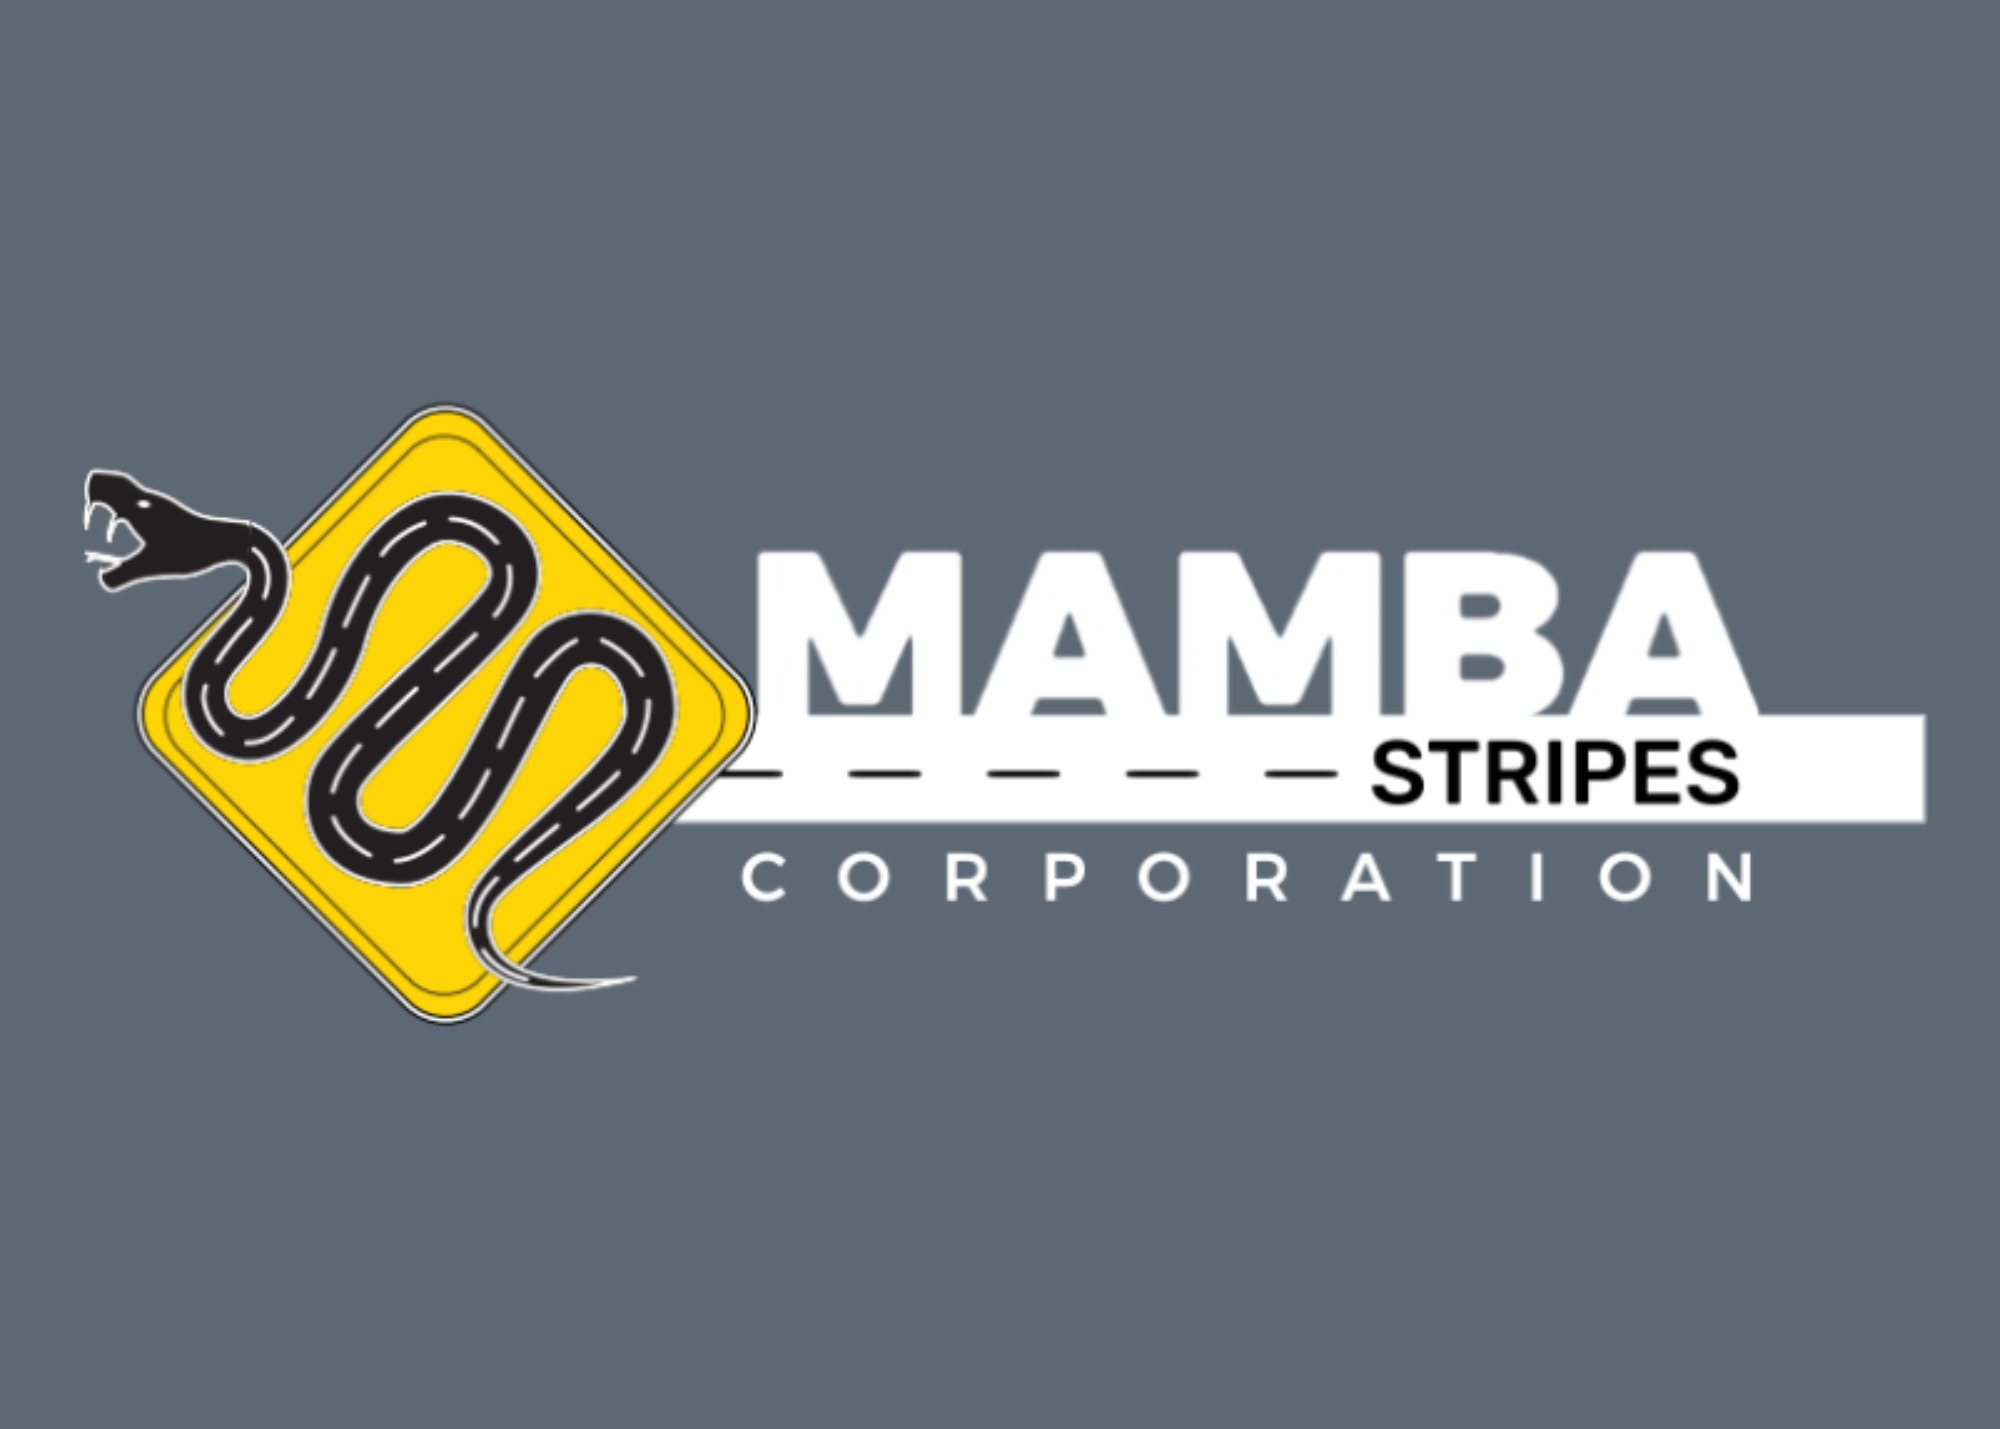 Mamba stripes corporation logo 